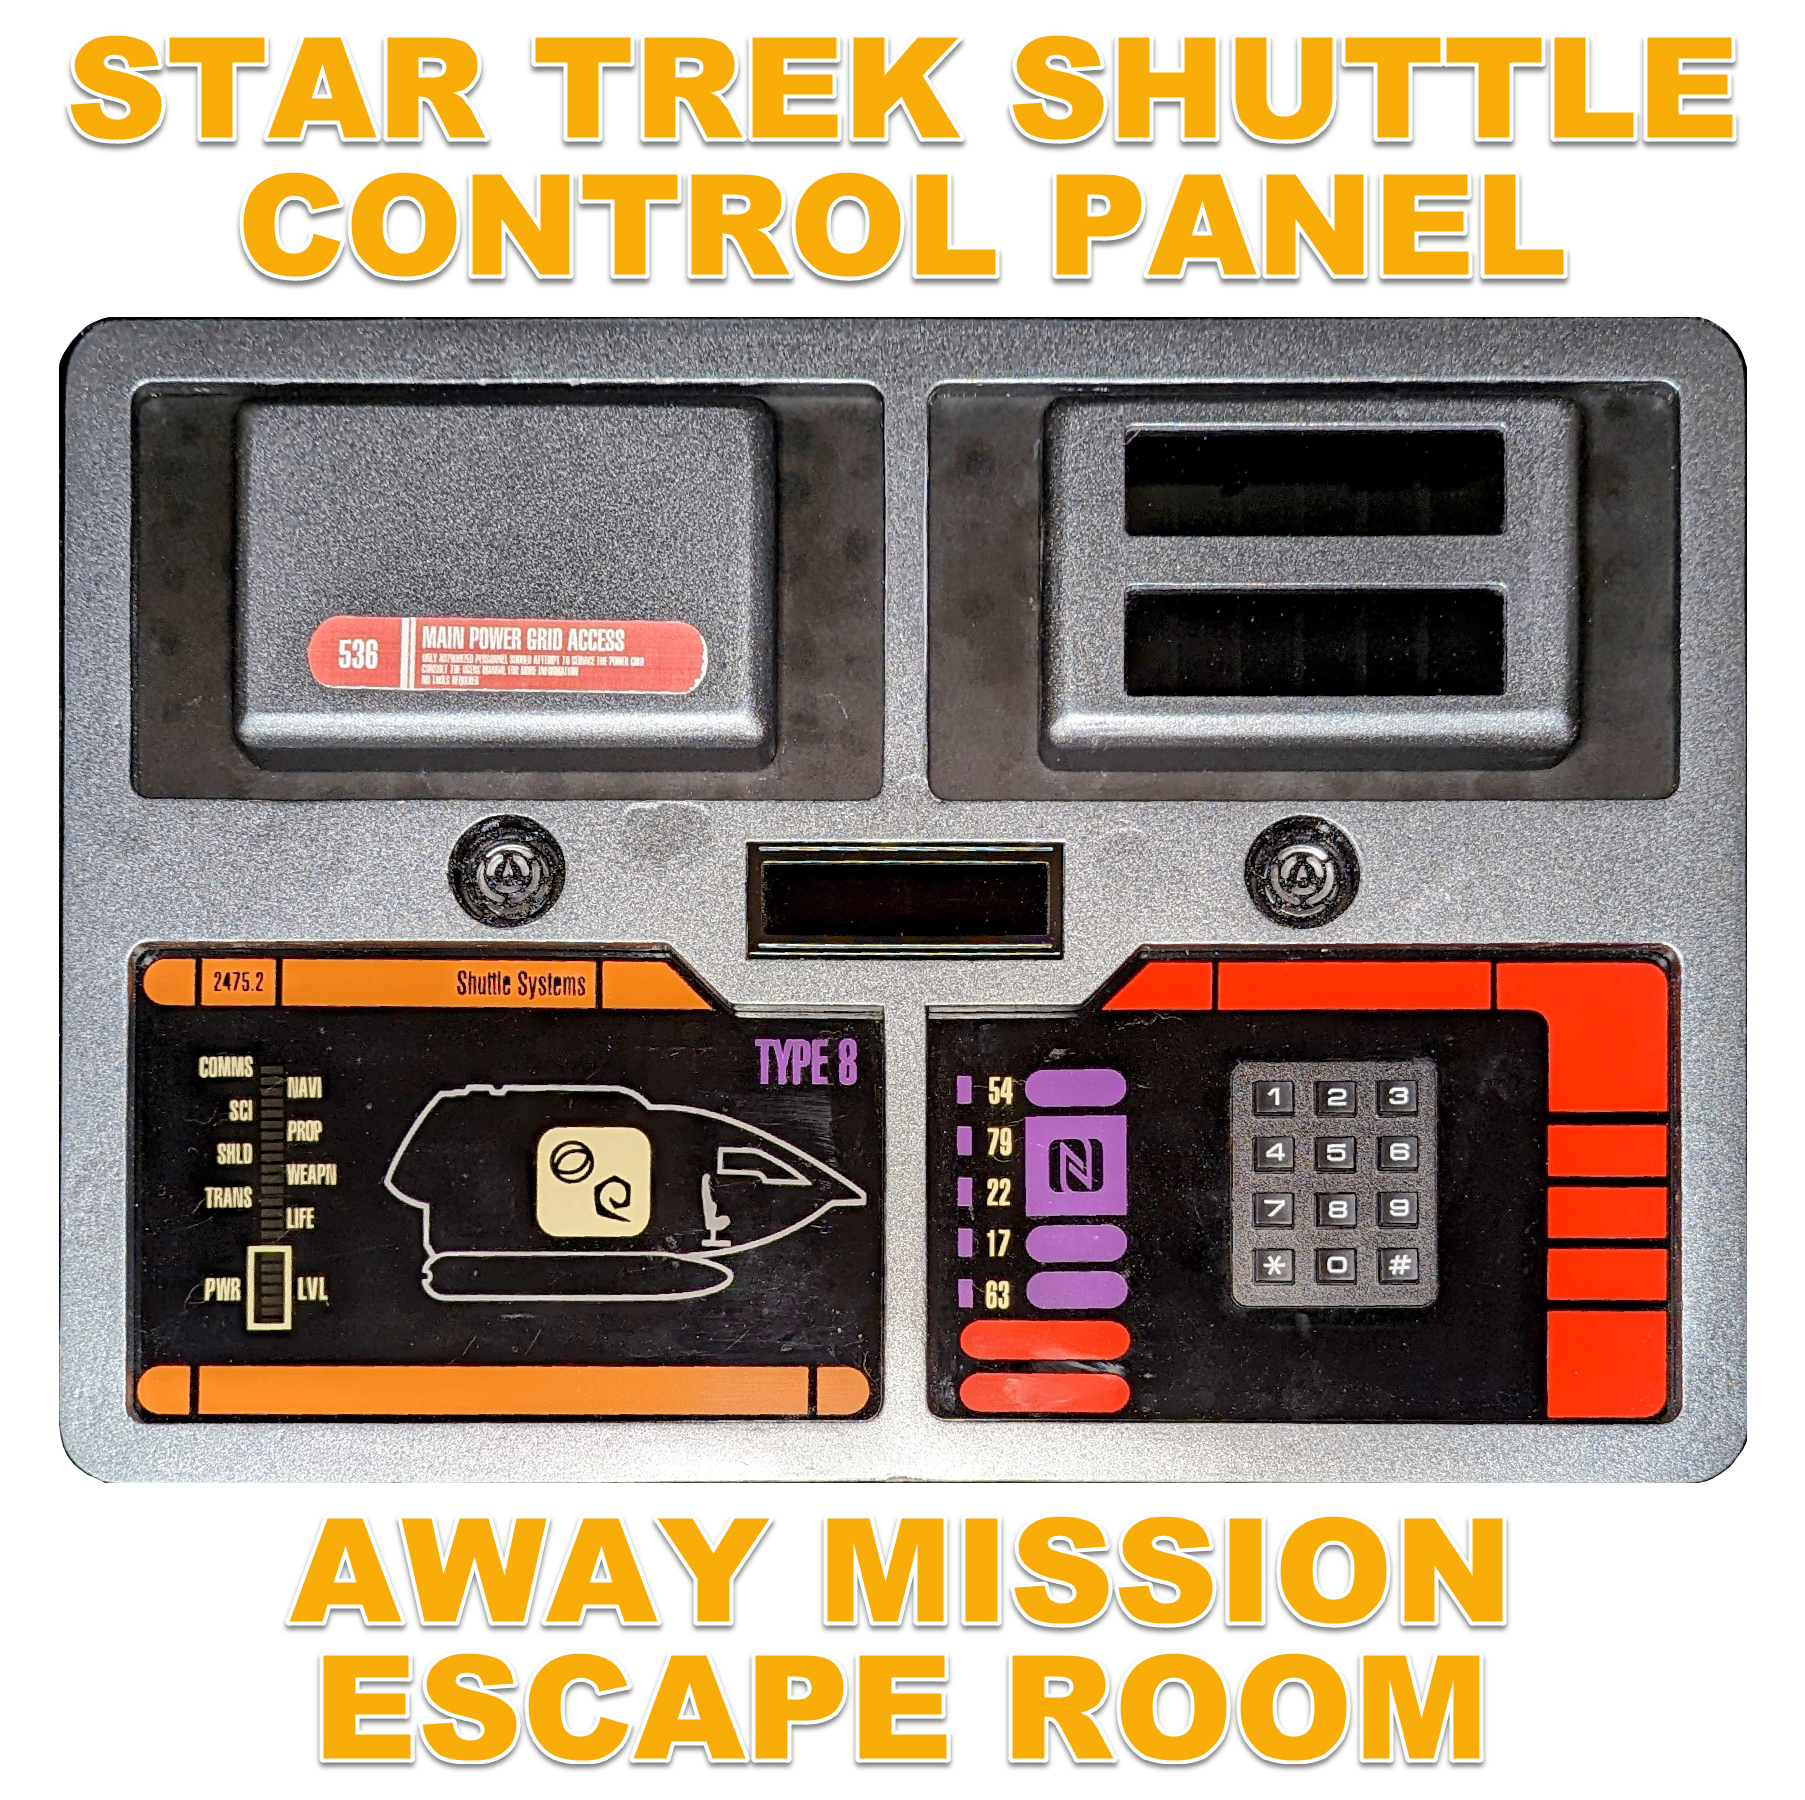 Star Trek Shuttle Control Panel